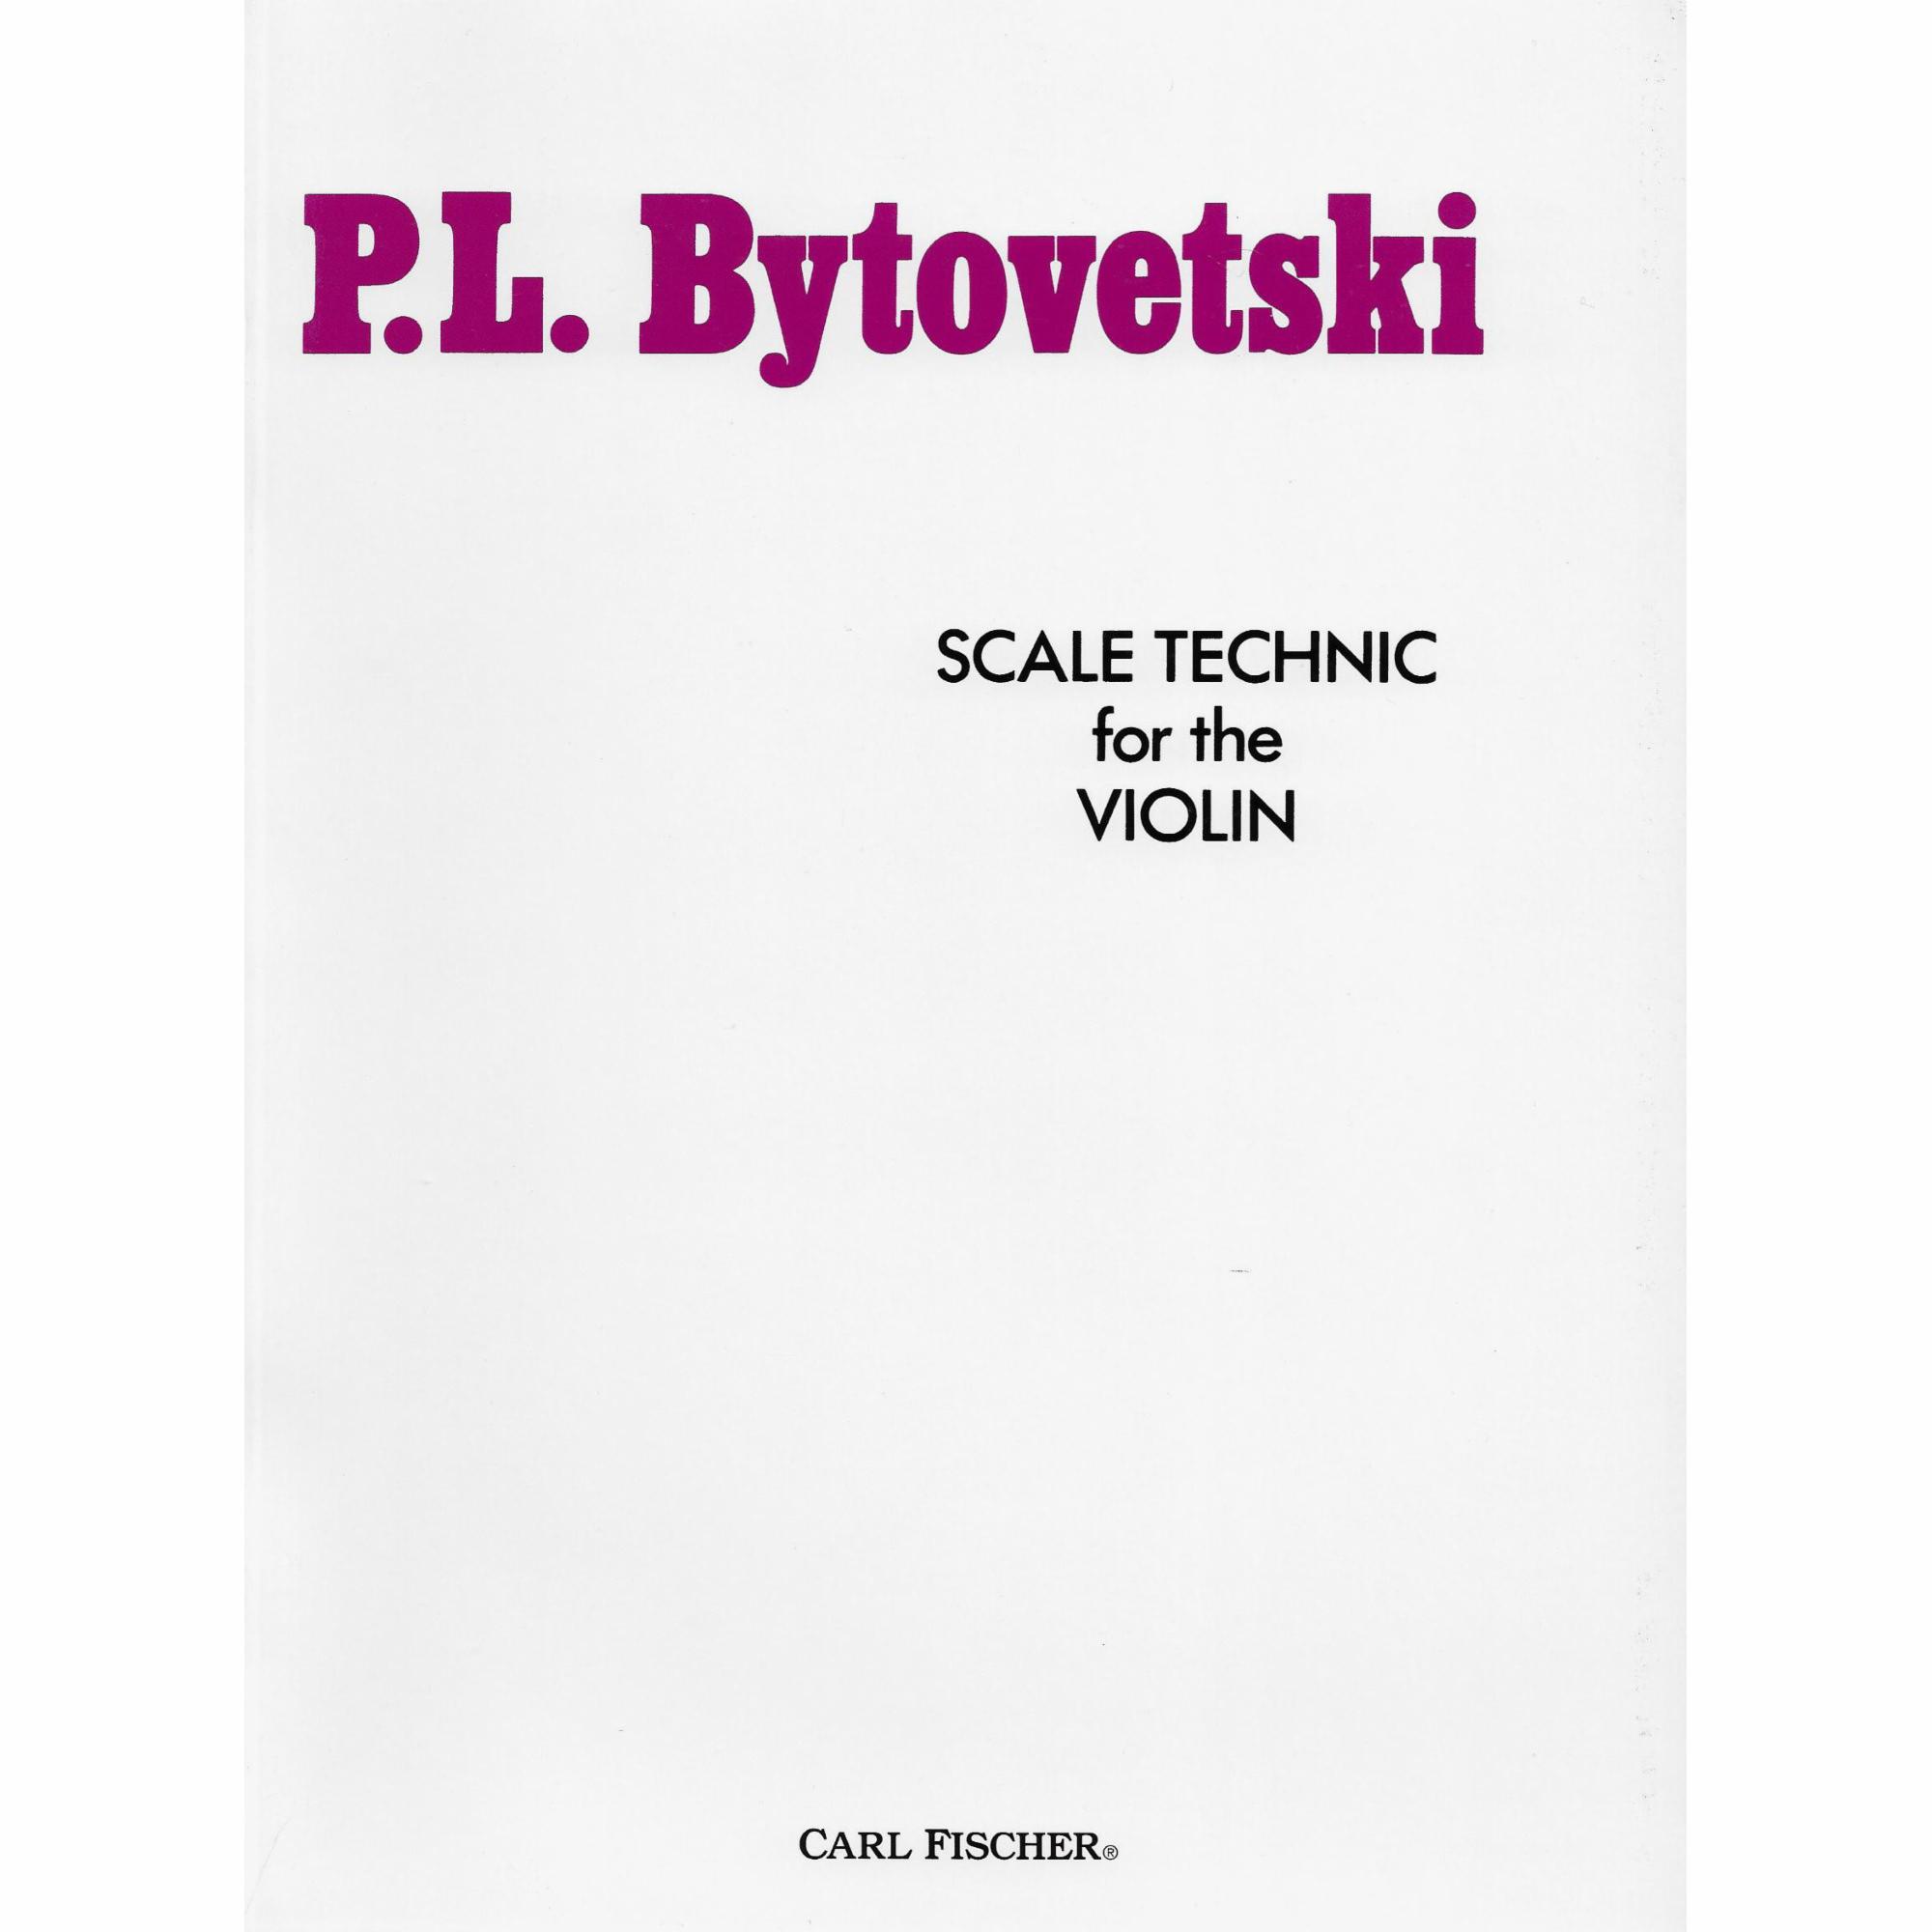 Bytovetski -- Scale Technic for the Violin